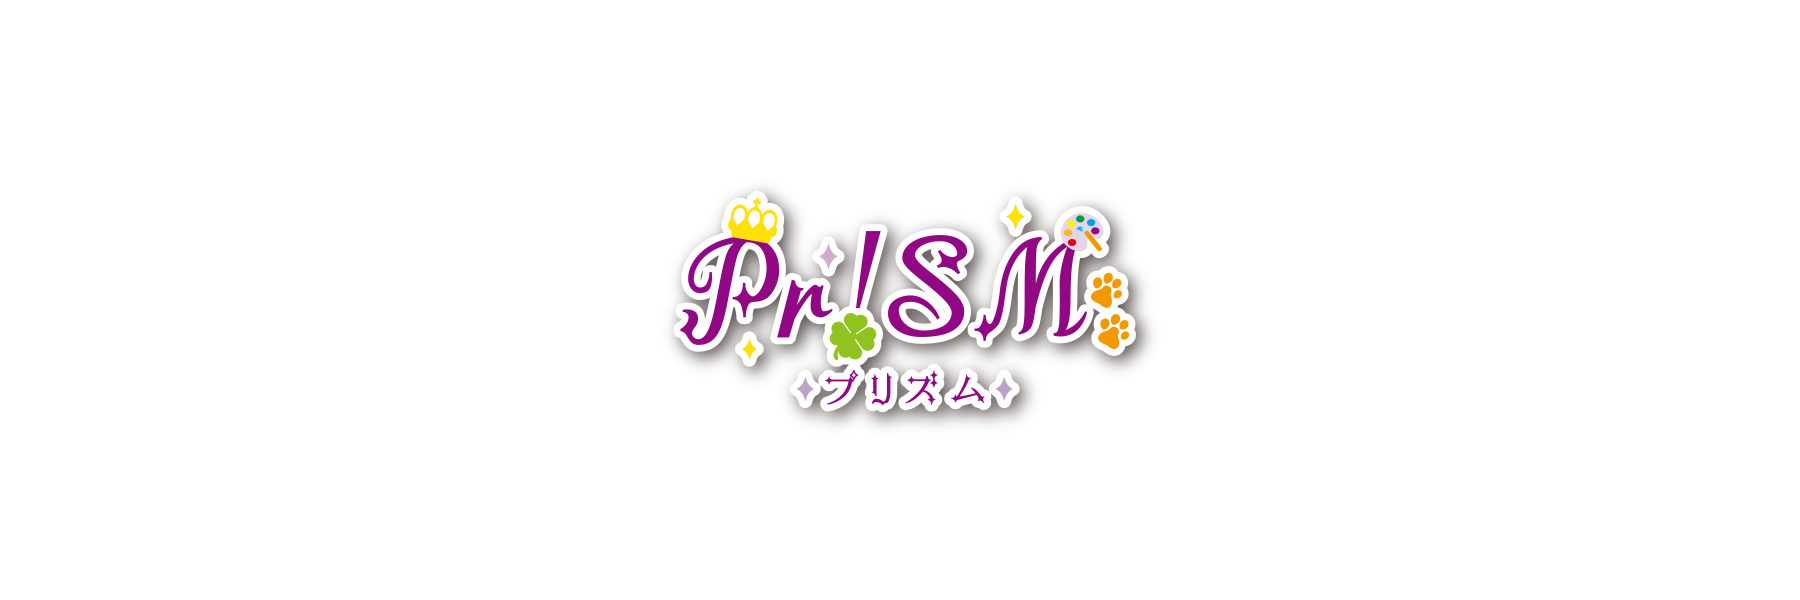 prism-official